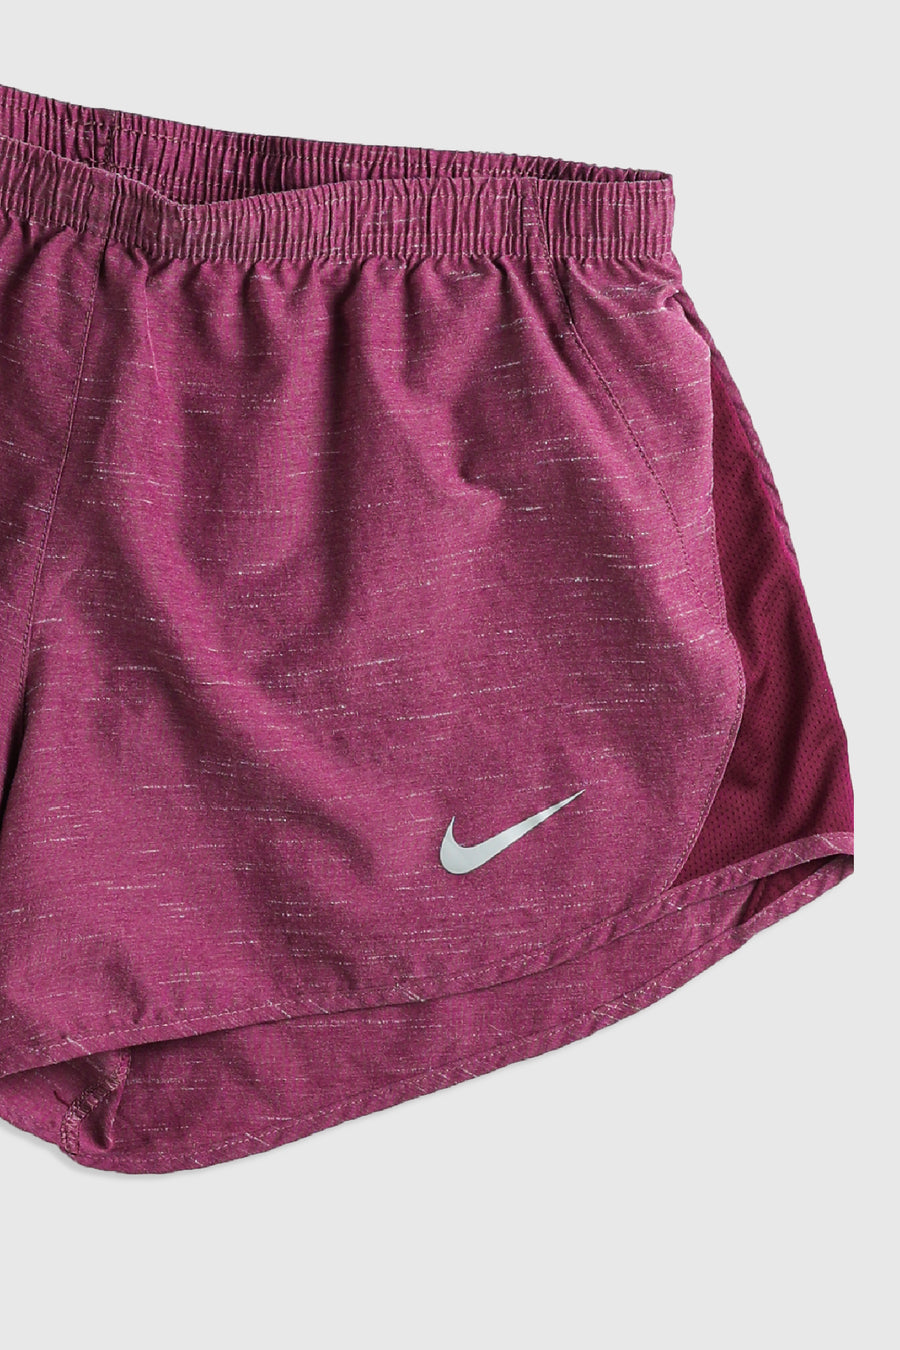 Vintage Nike Shorts - M